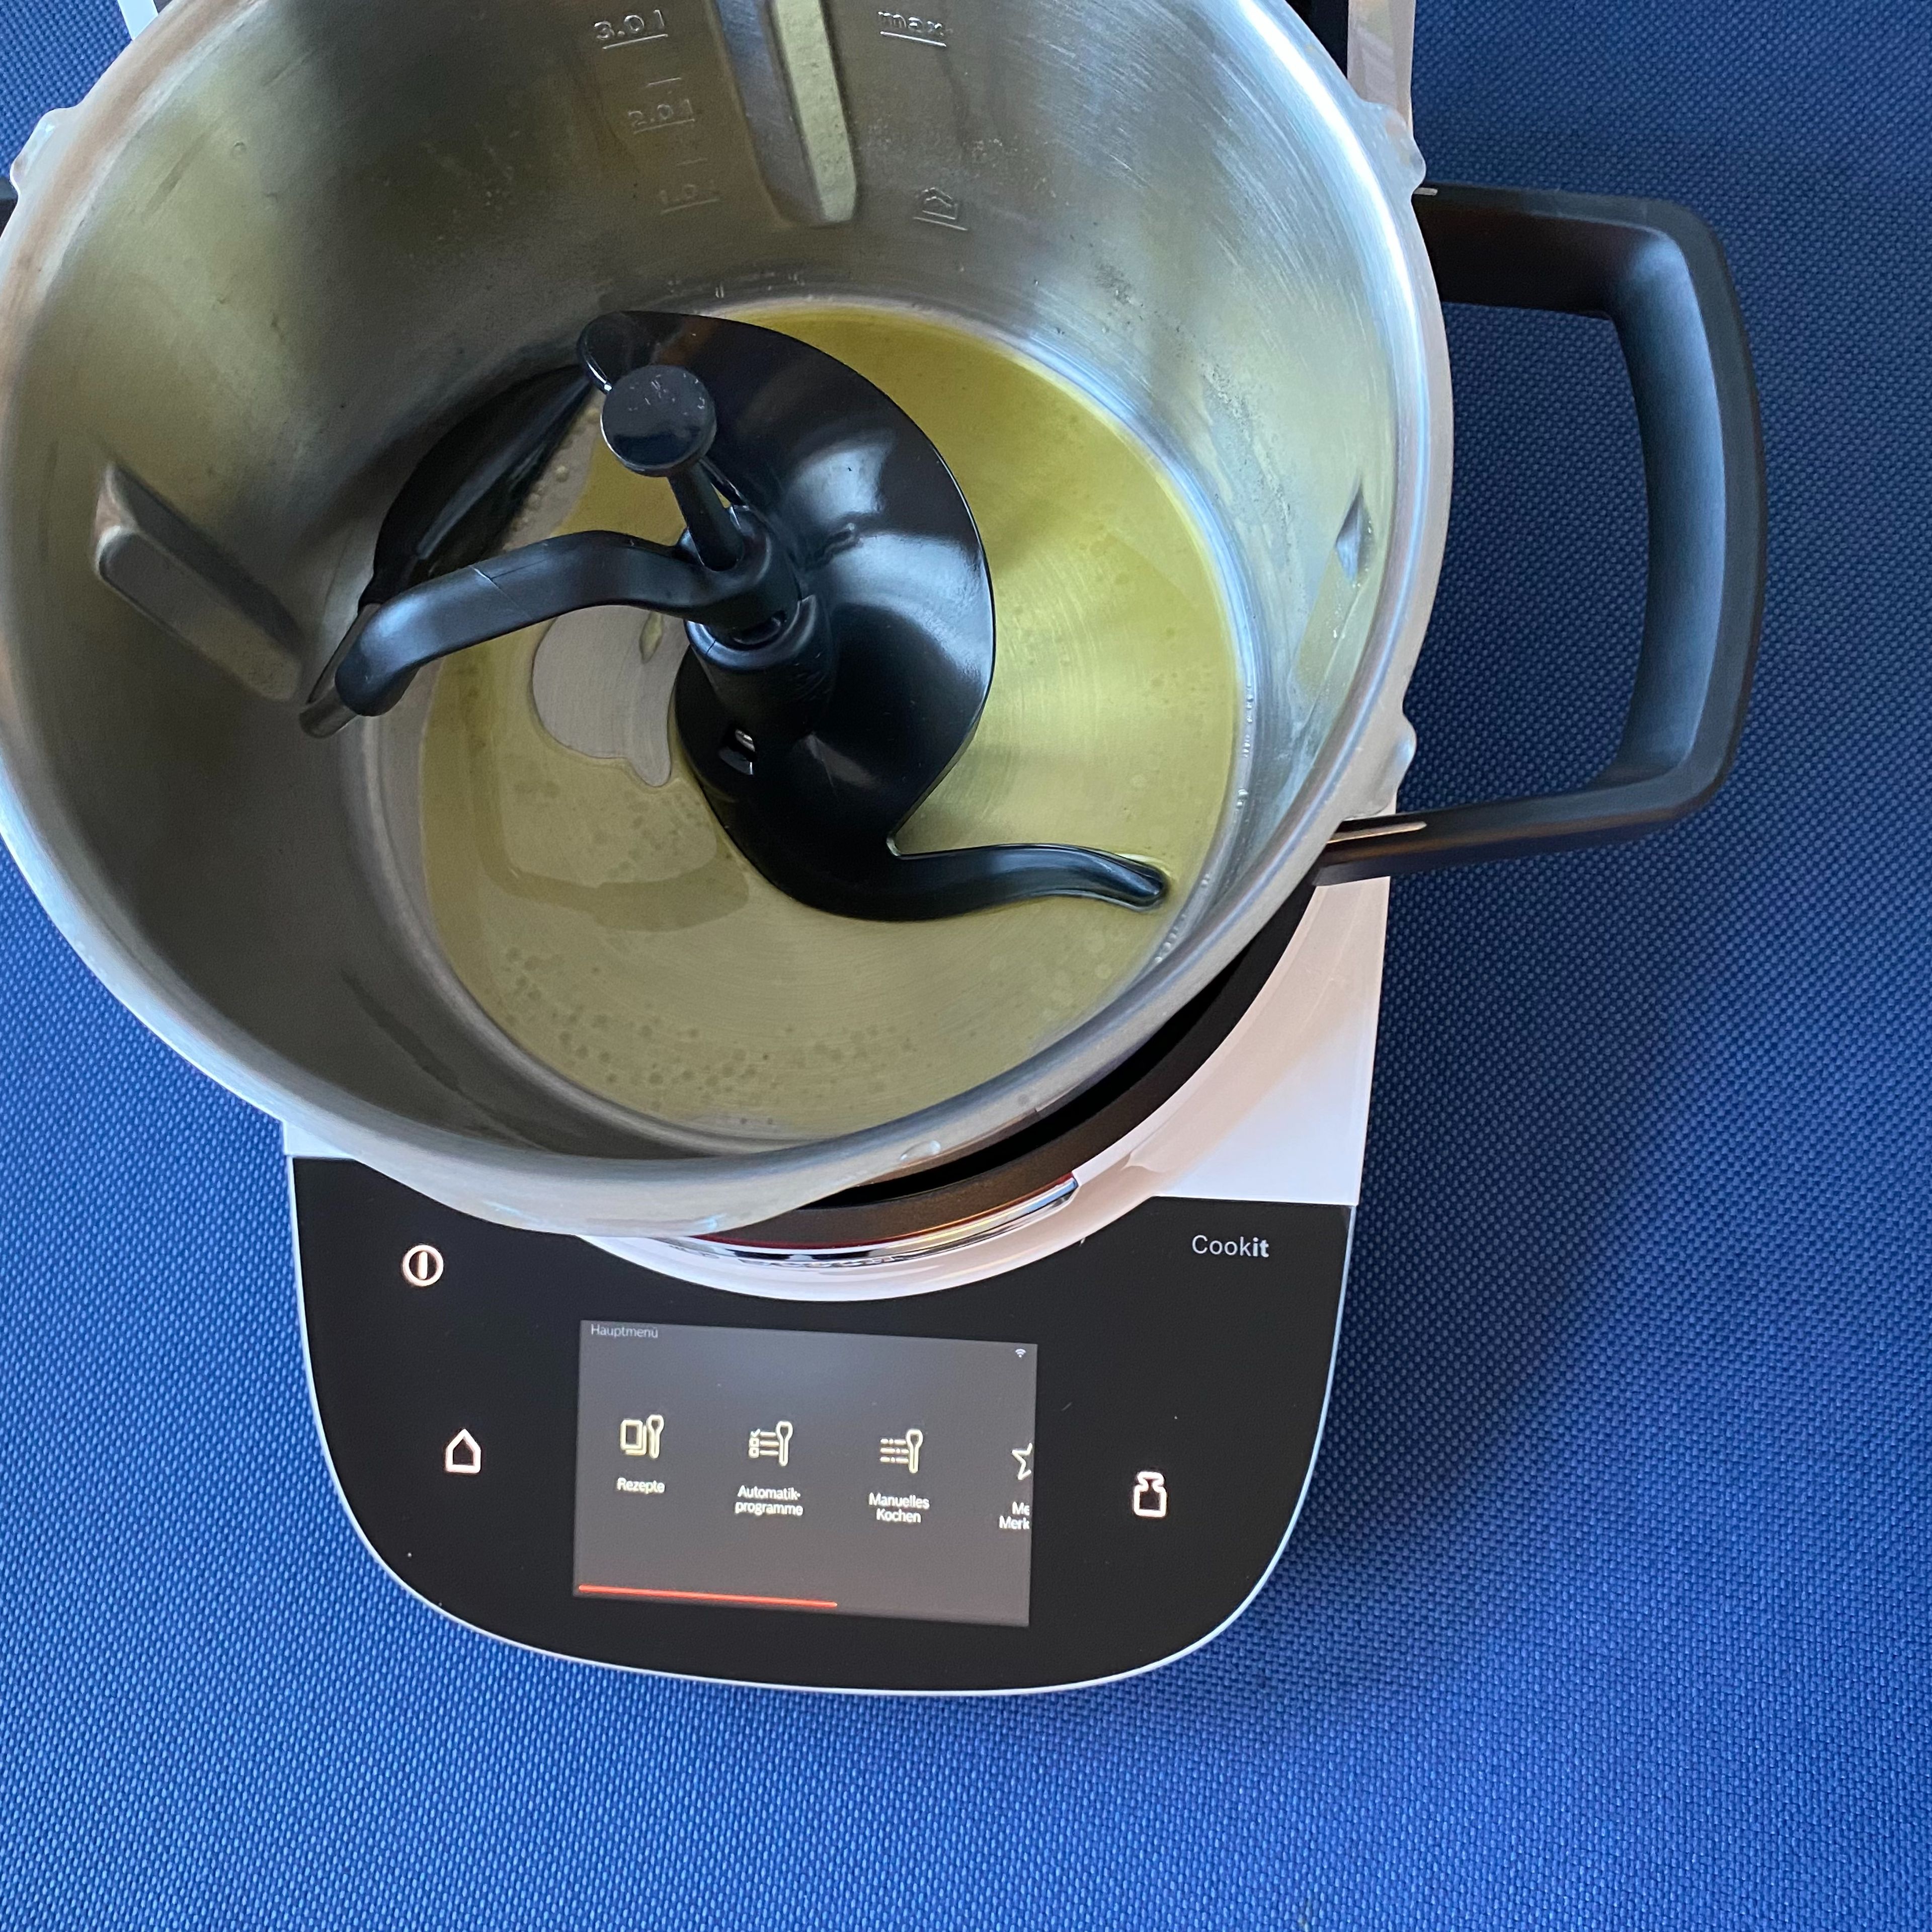 Cookit 3D-Rührer einsetzen, Öl abwiegen und erhitzen (3D-Rührer | Stufe 4 | 160° | 3 Min).